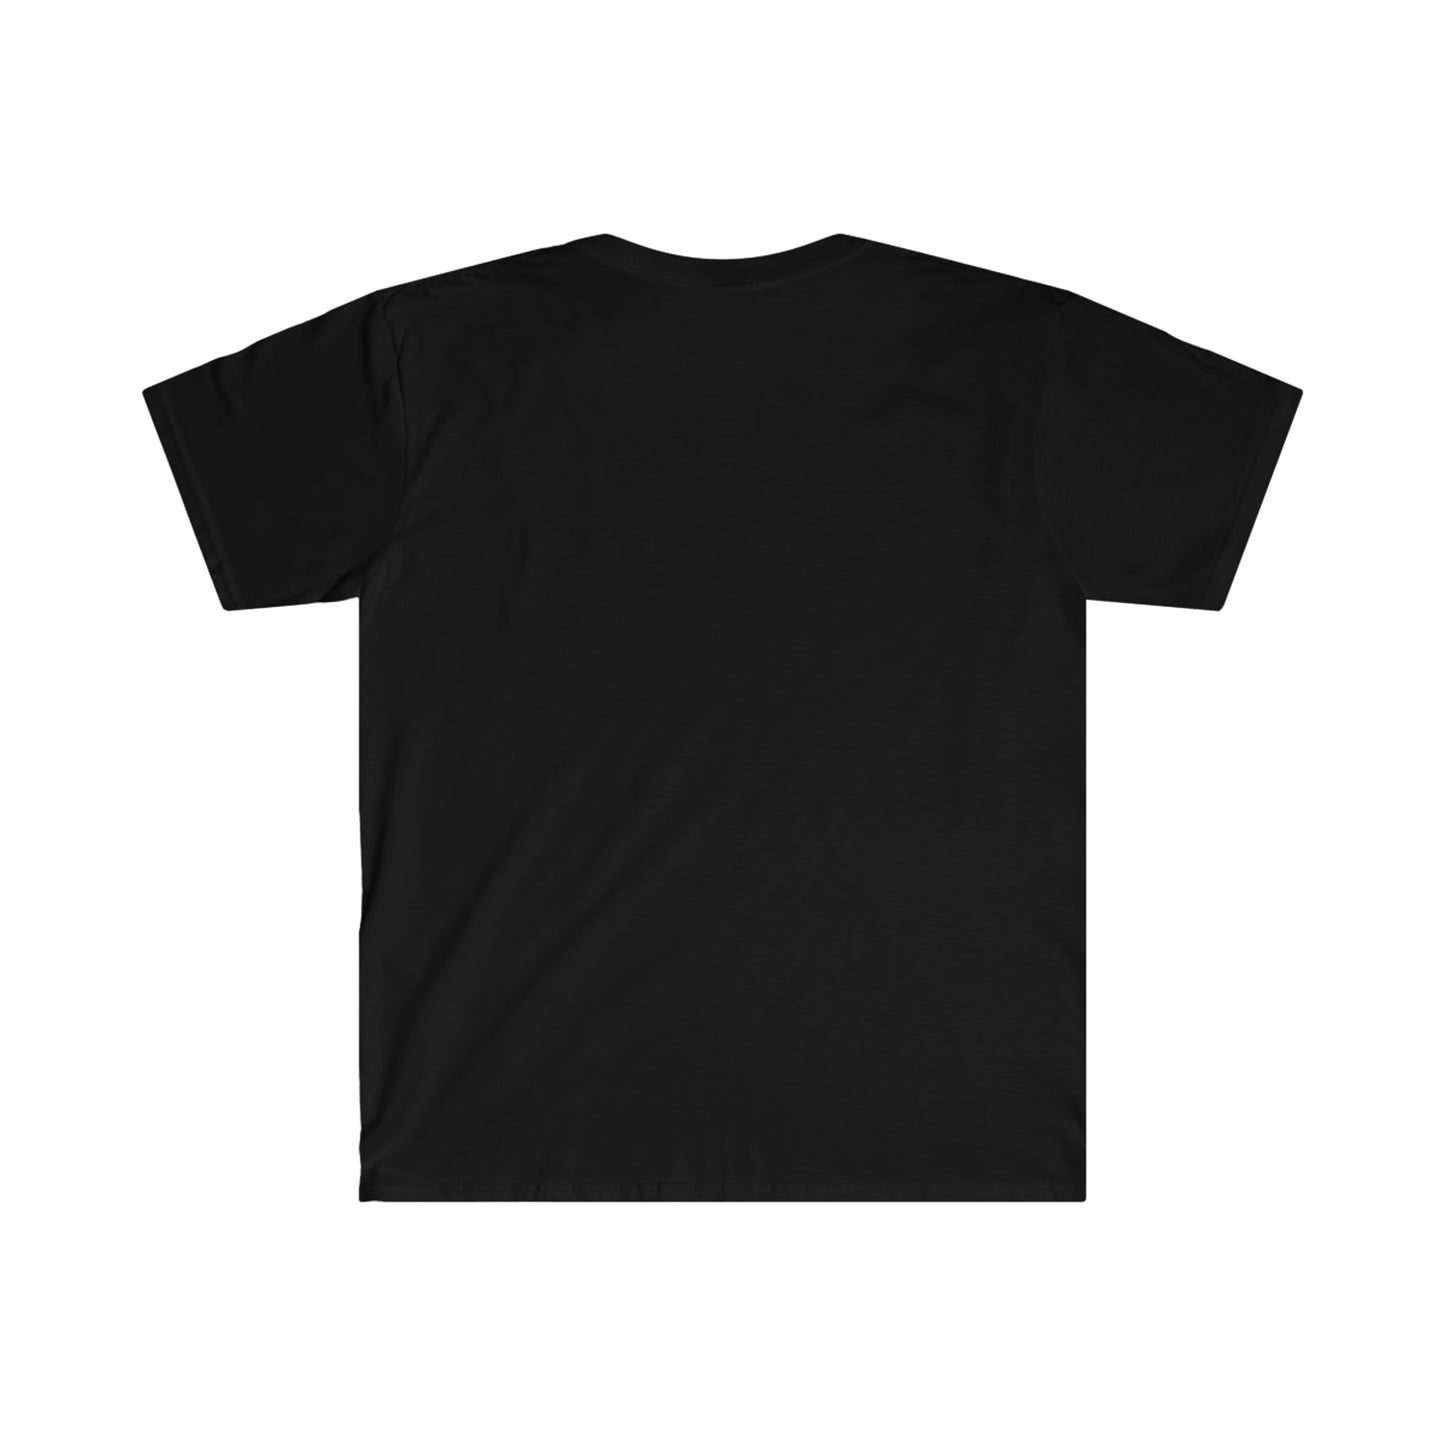 Protect Brim Logo T-Shirt